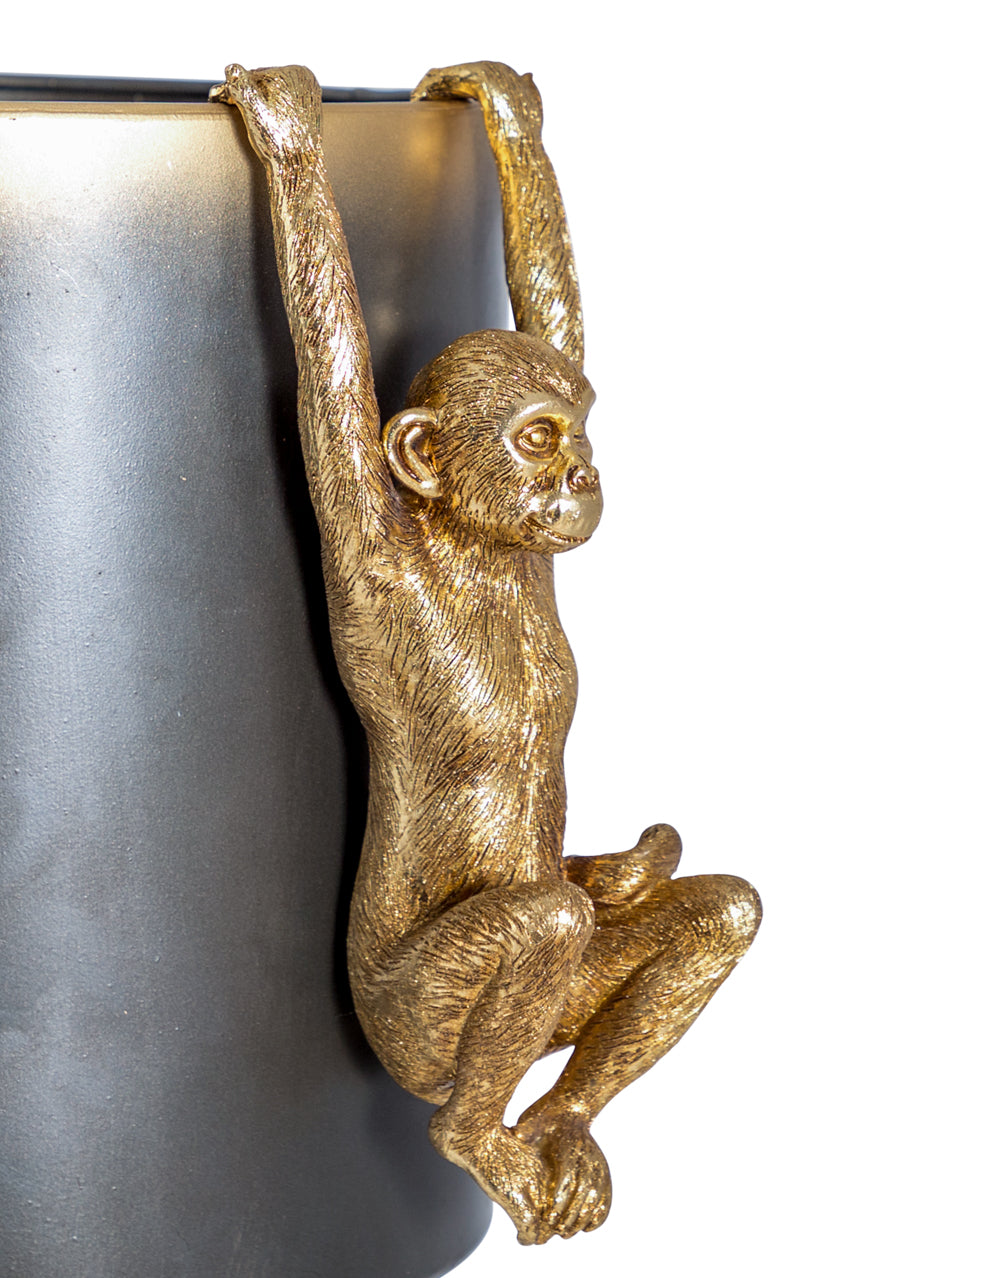 Antique Gold Hanging Monkey Pot Decor